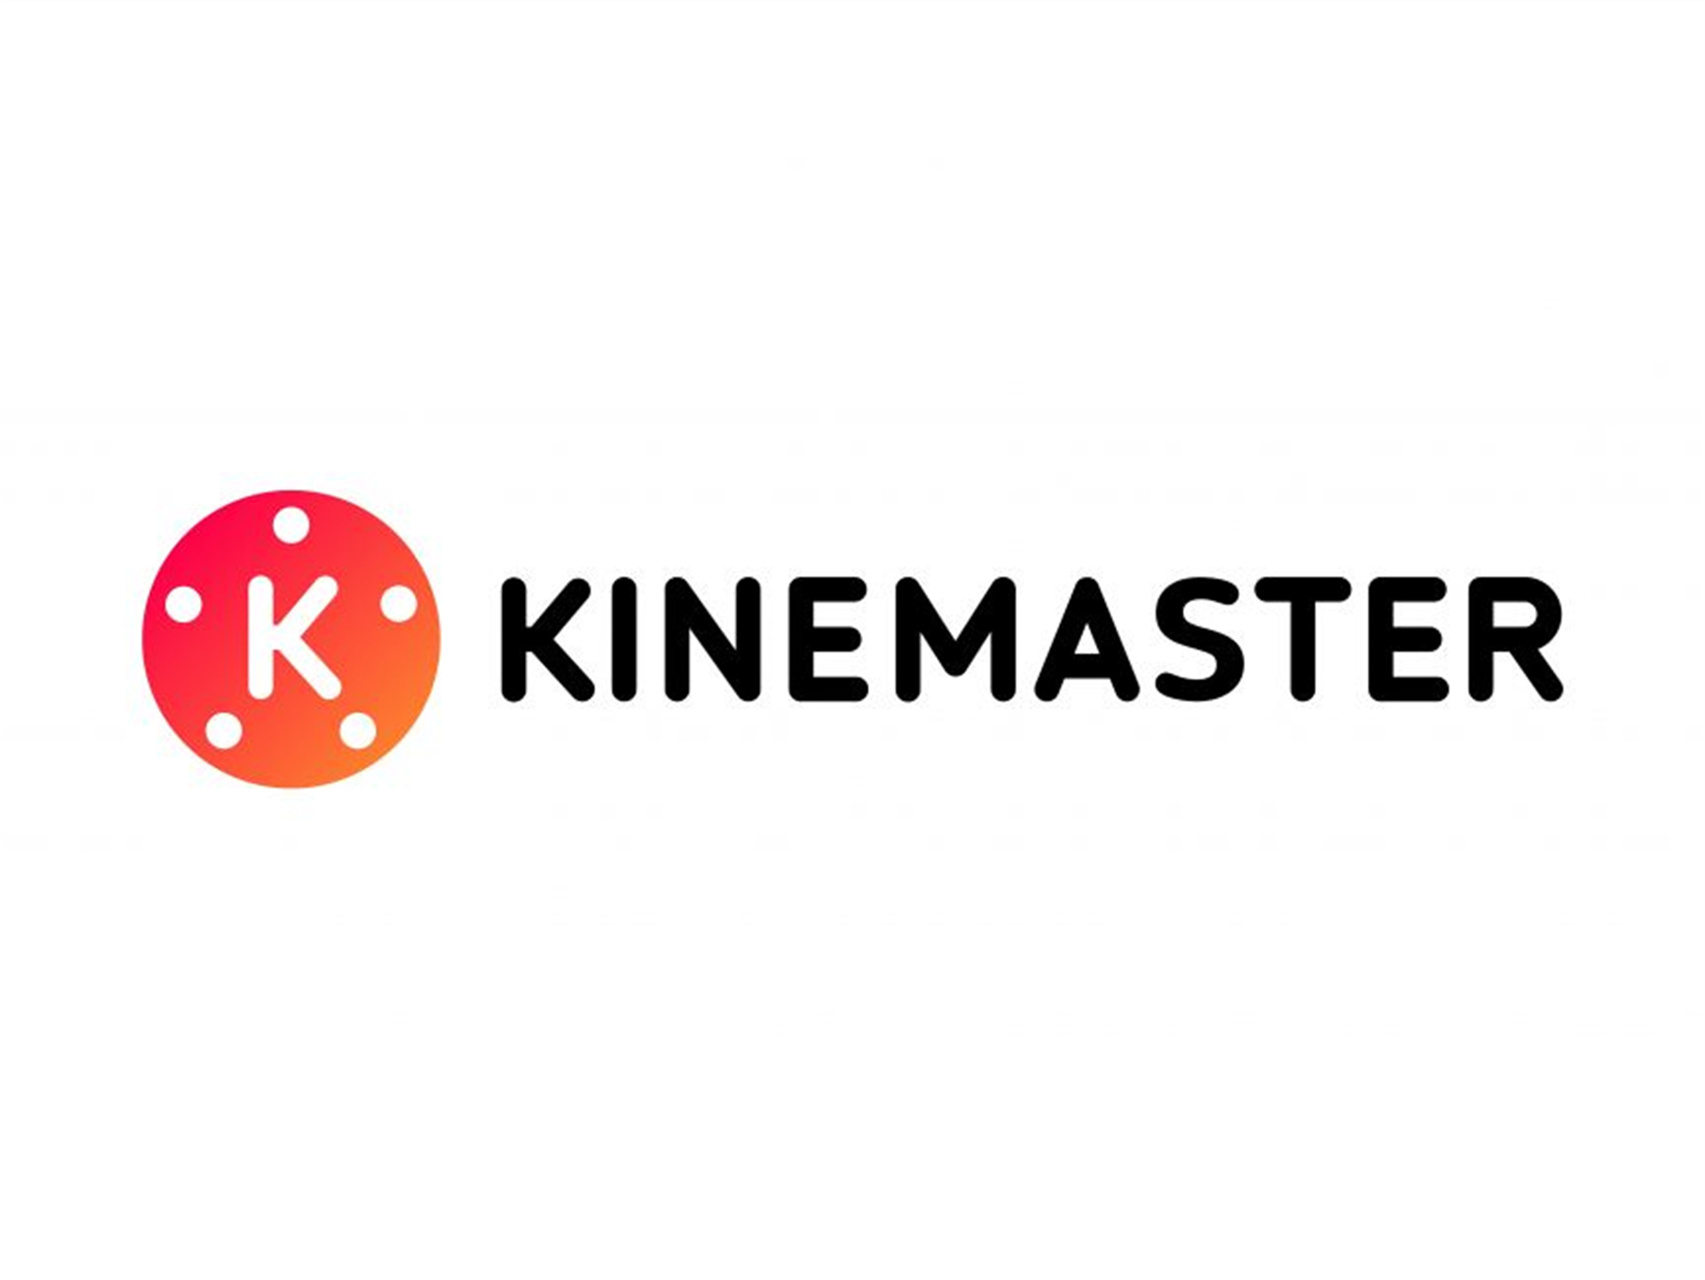 B BEATSYNC - KineMaster Corporation Trademark Registration